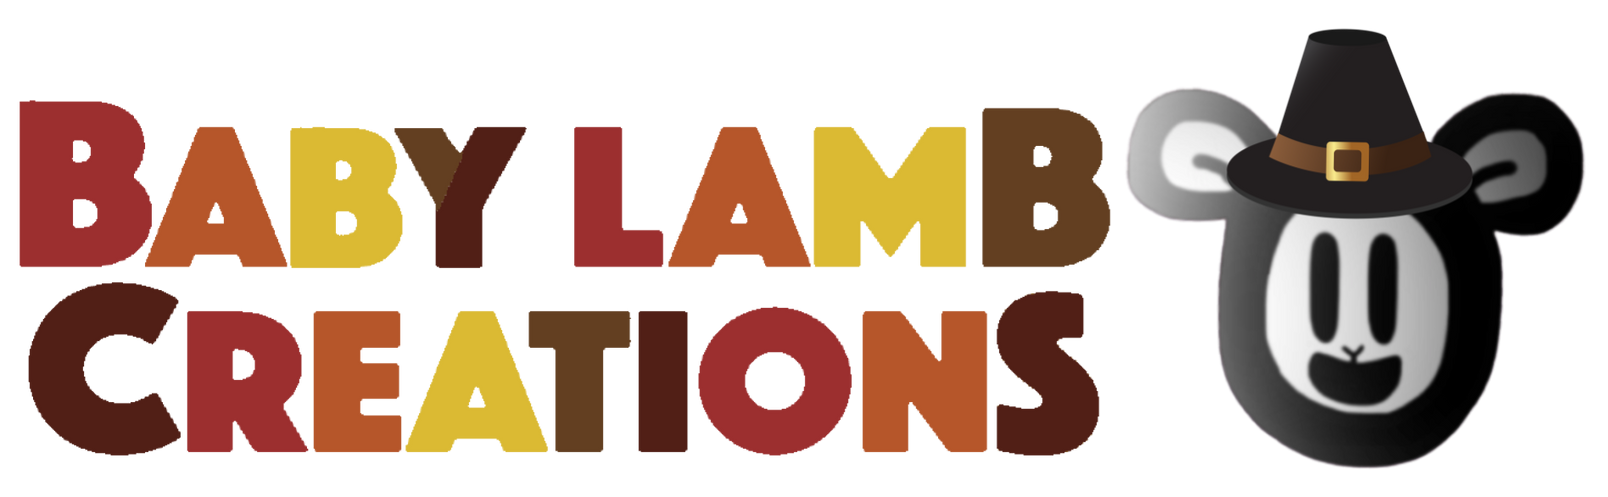 Baby Lamb Creations Logo (Thanksgiving Variant)